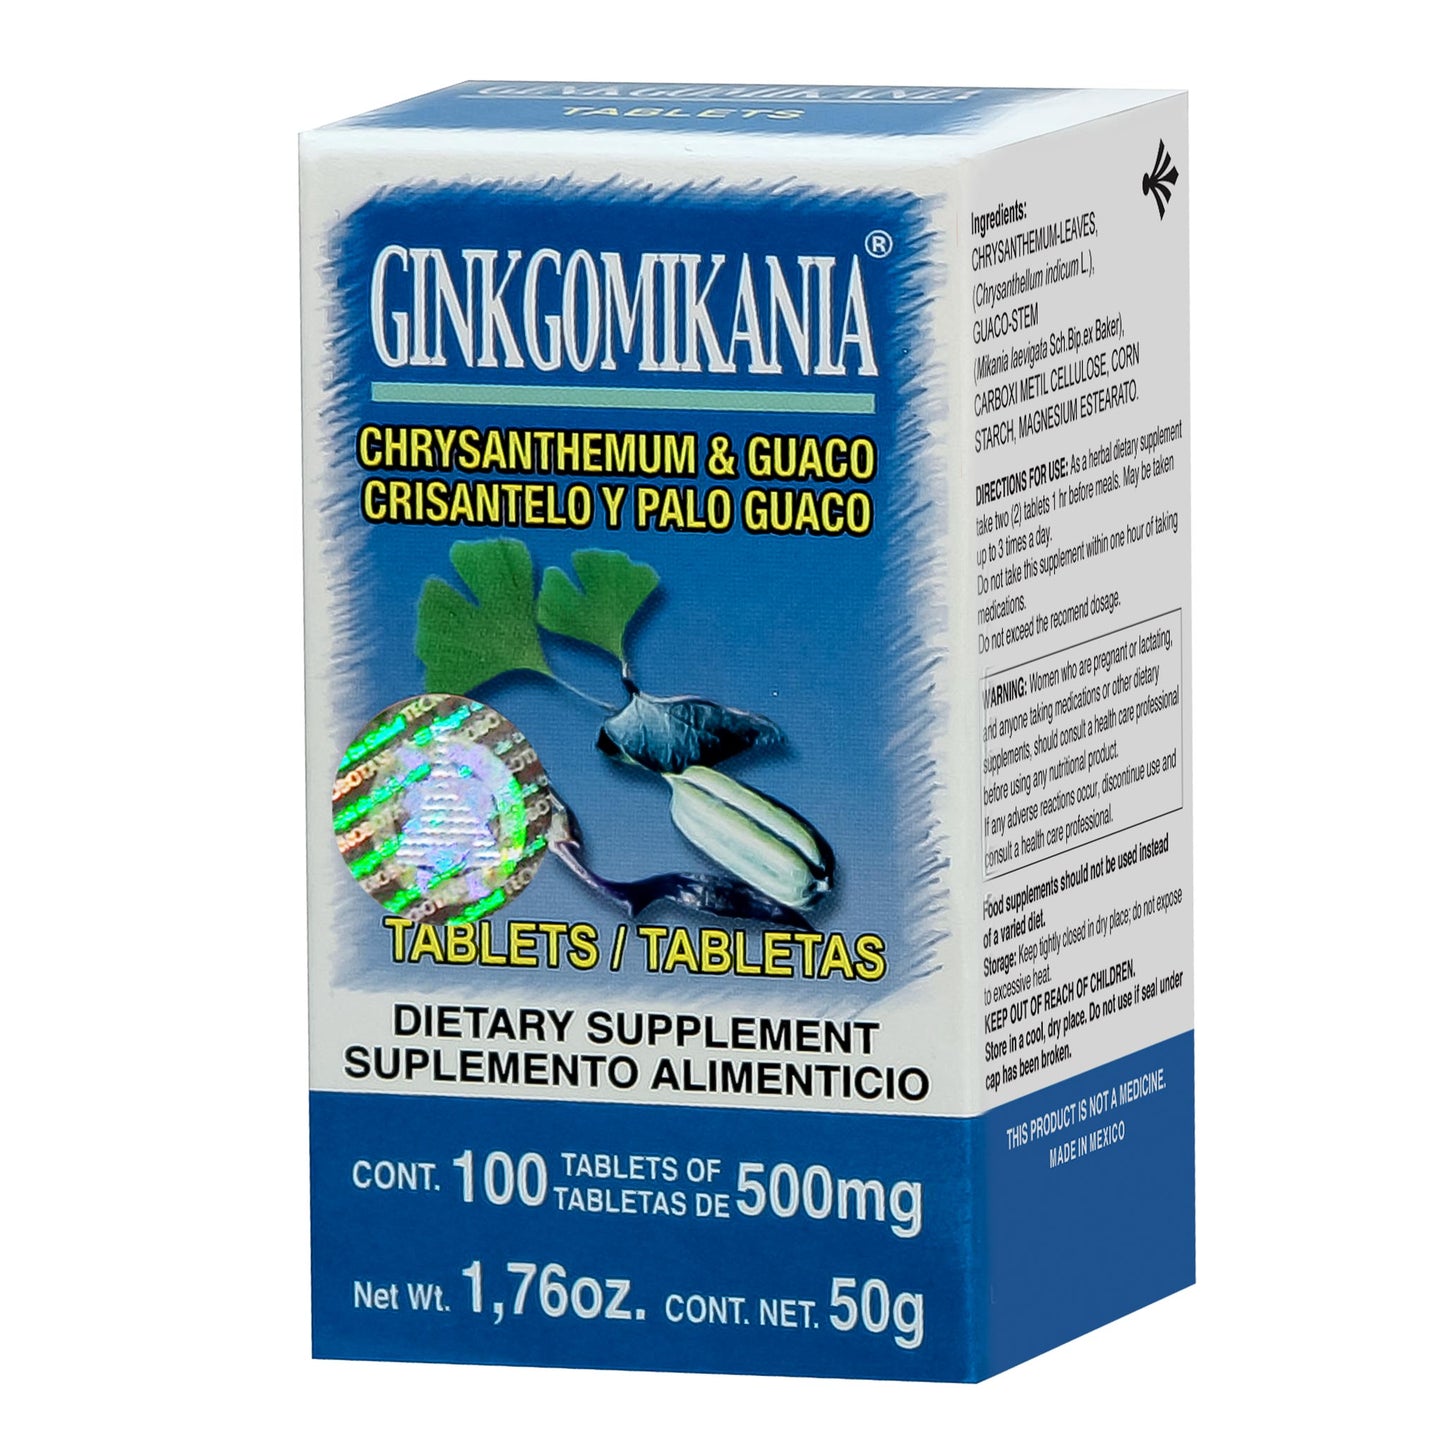 GINKGOMIKANIA ® 100 tabletas